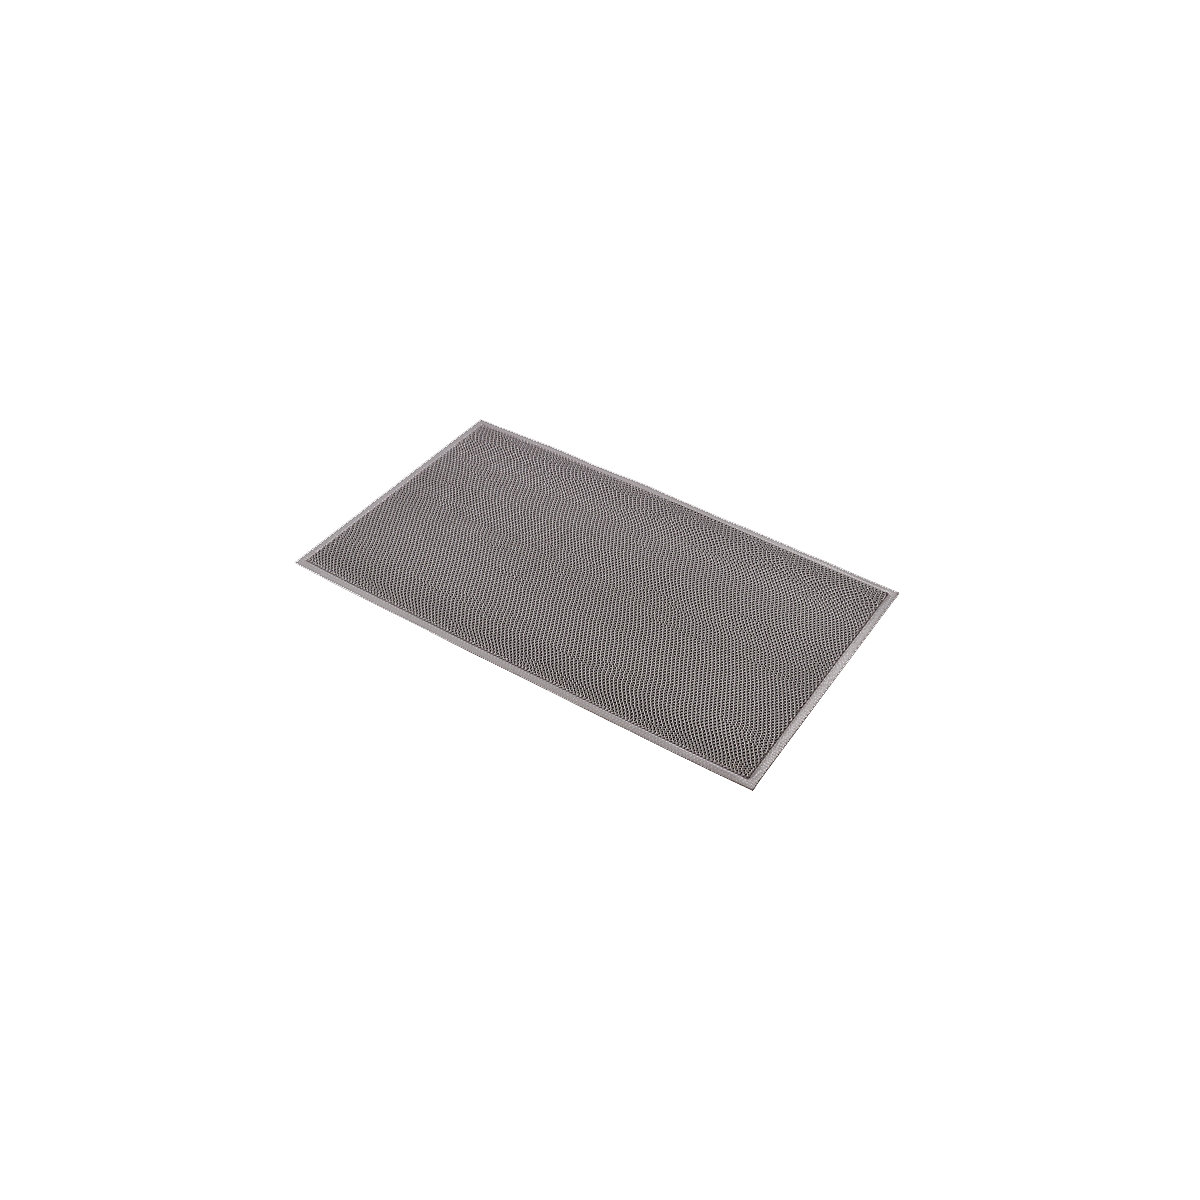 Predpražnik za prestrezanje umazanije – NOTRAX, siva, 1500 x 900 mm-3